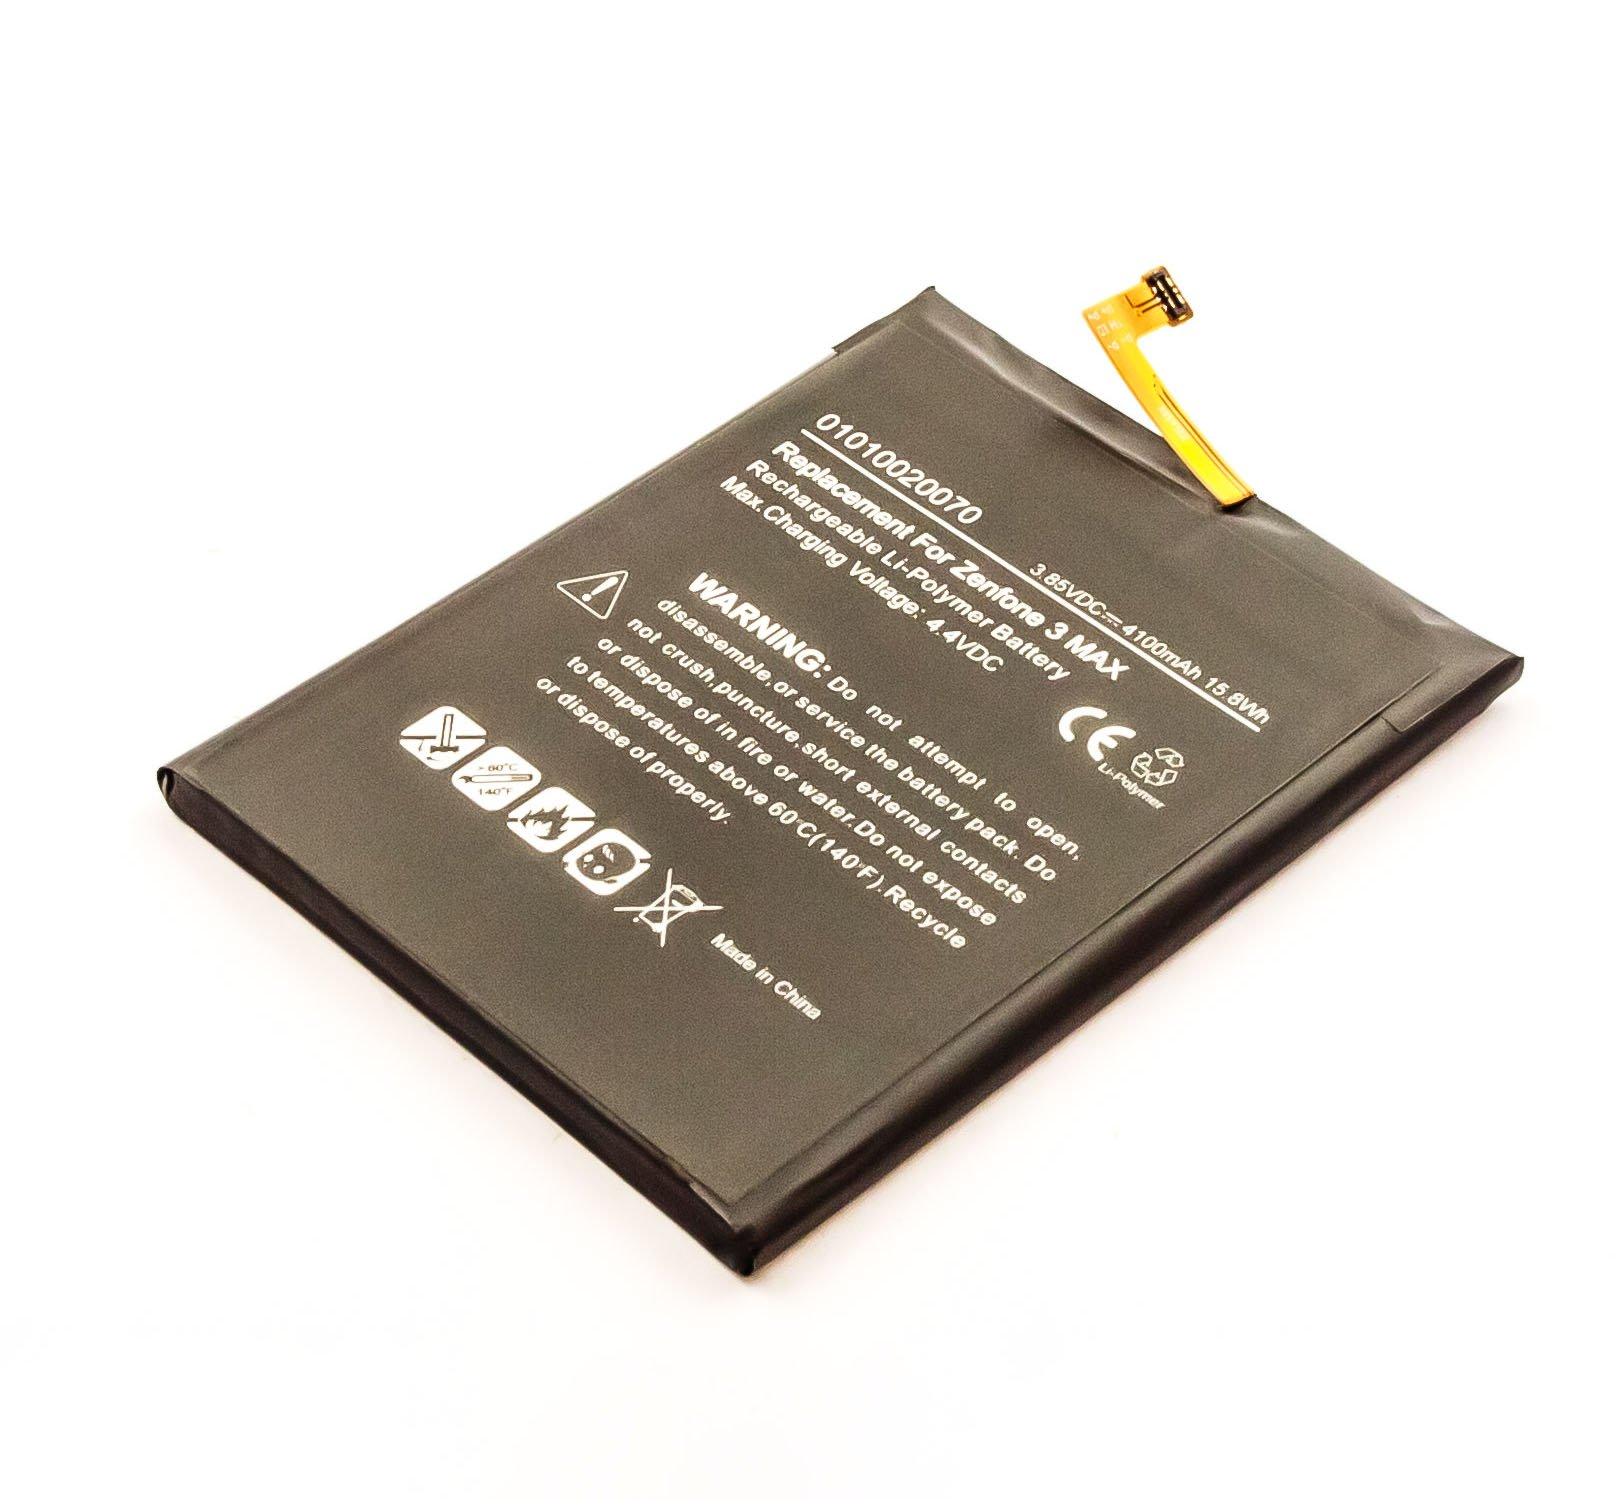 AGI Akku Li-Pol kompatibel mit 4100 3.9 ZenFone Handy-/Smartphoneakku, mAh Max Asus Volt, 3